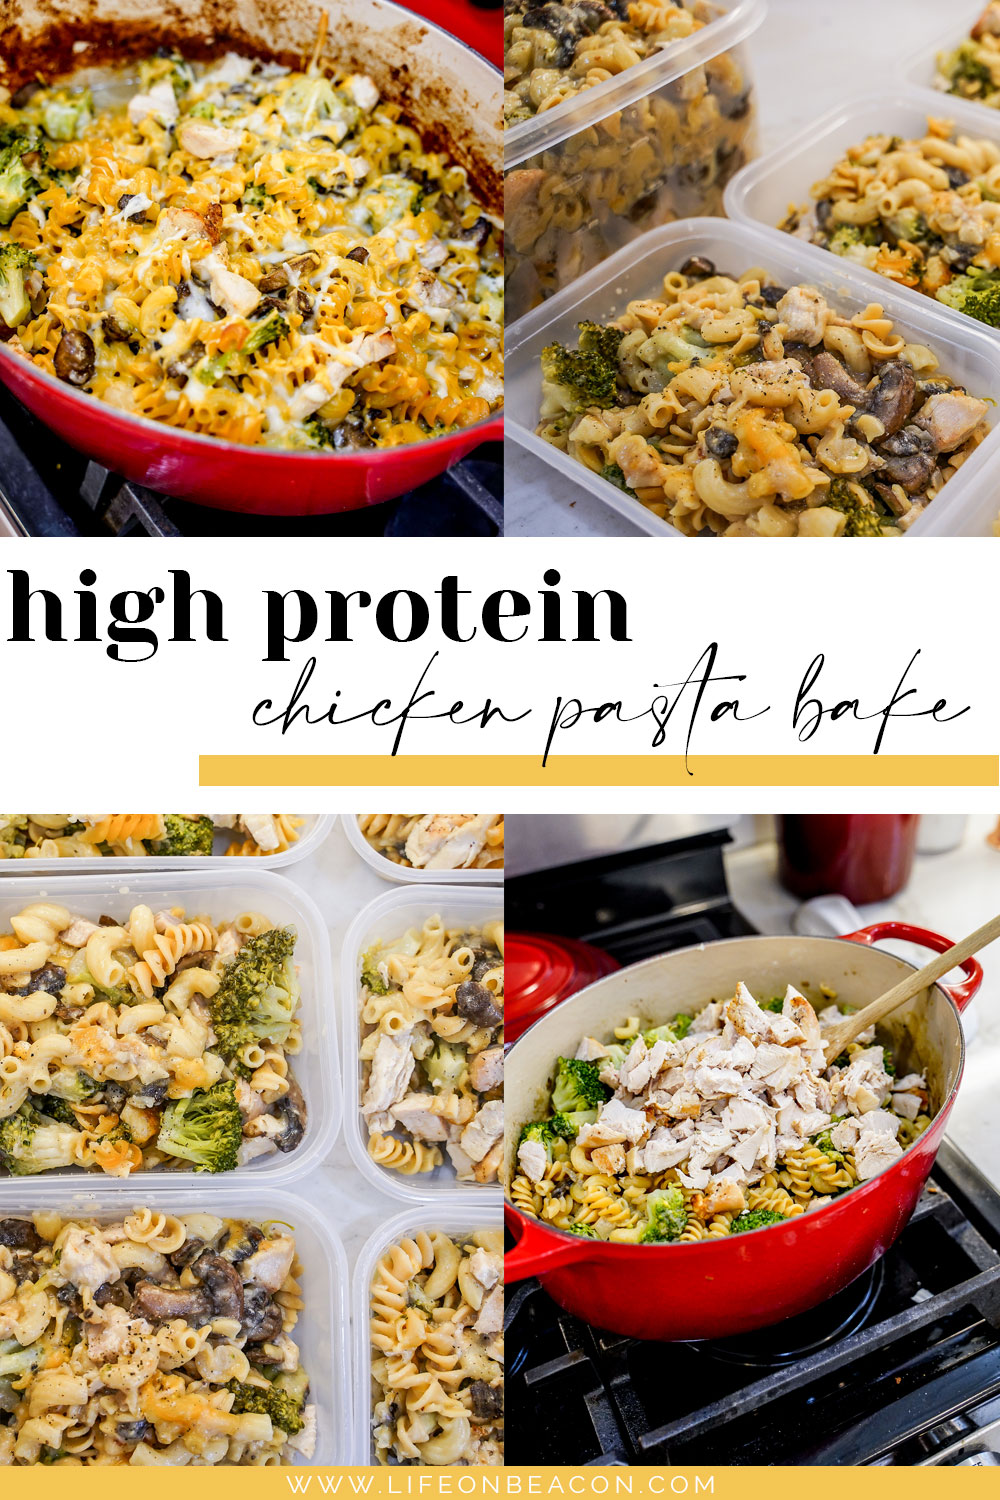 High Protein Chicken Pasta Bake | Life on Beacon